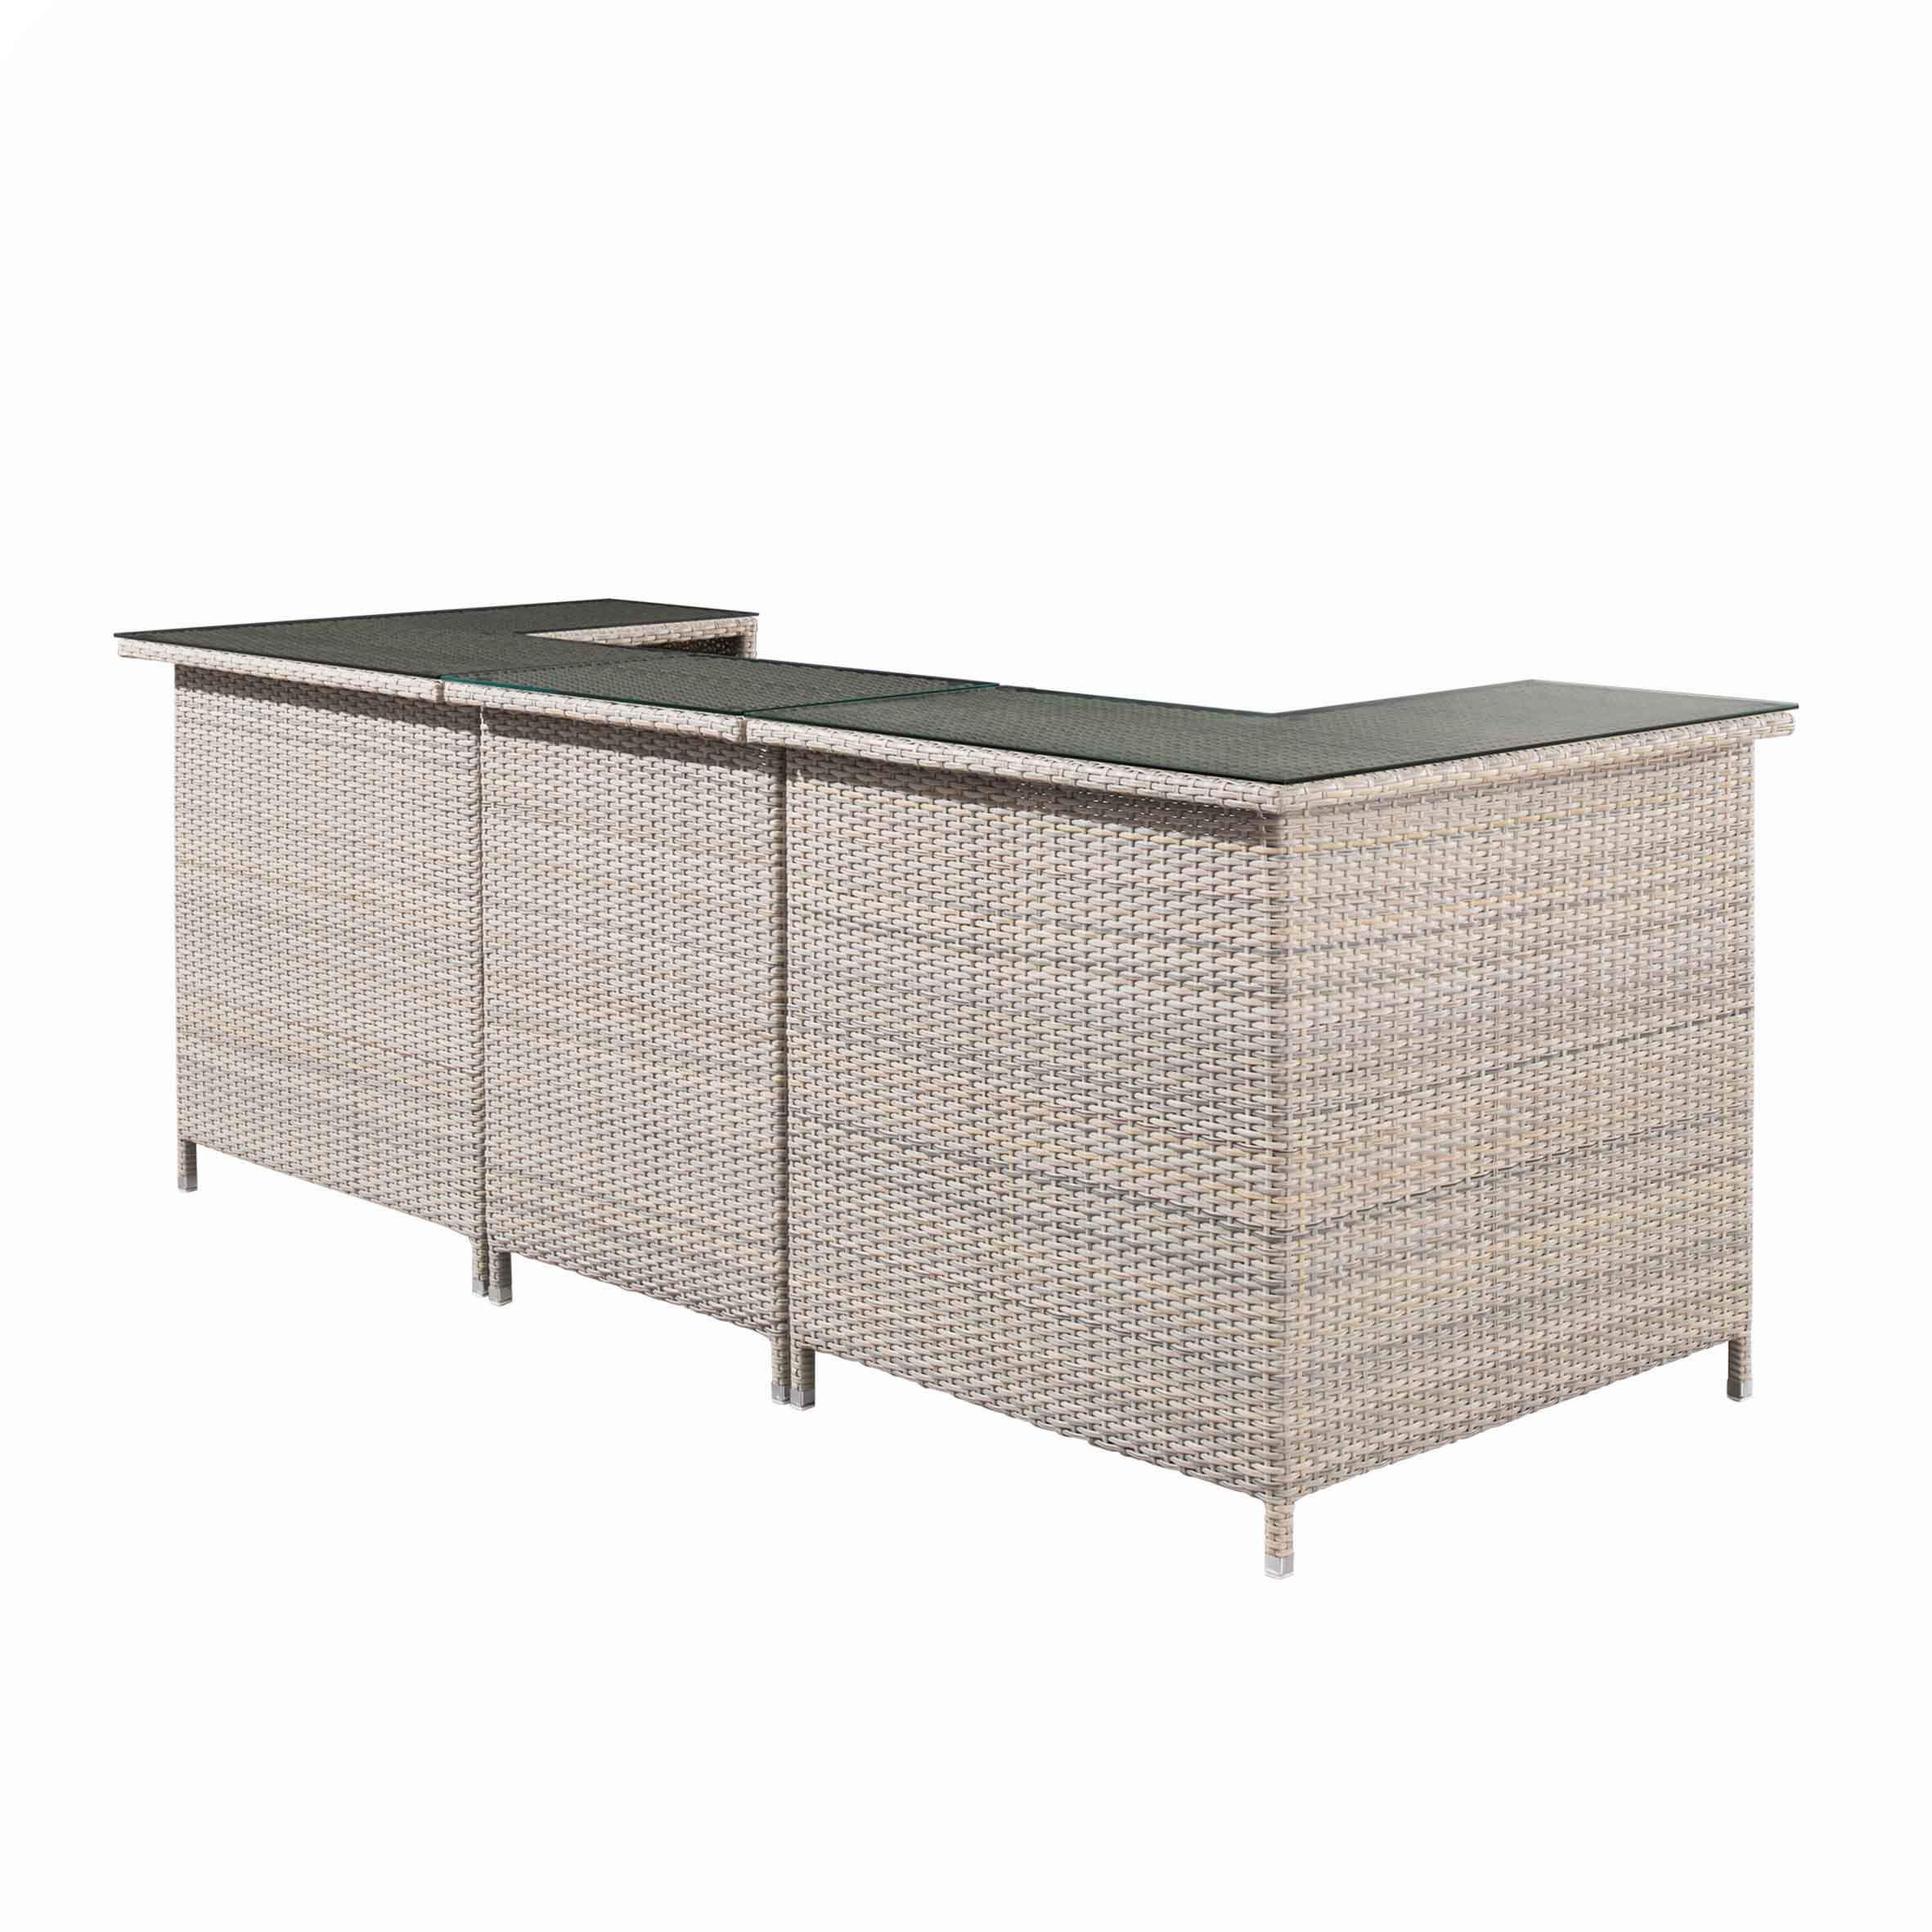 Ideal rattan corner bar table S4